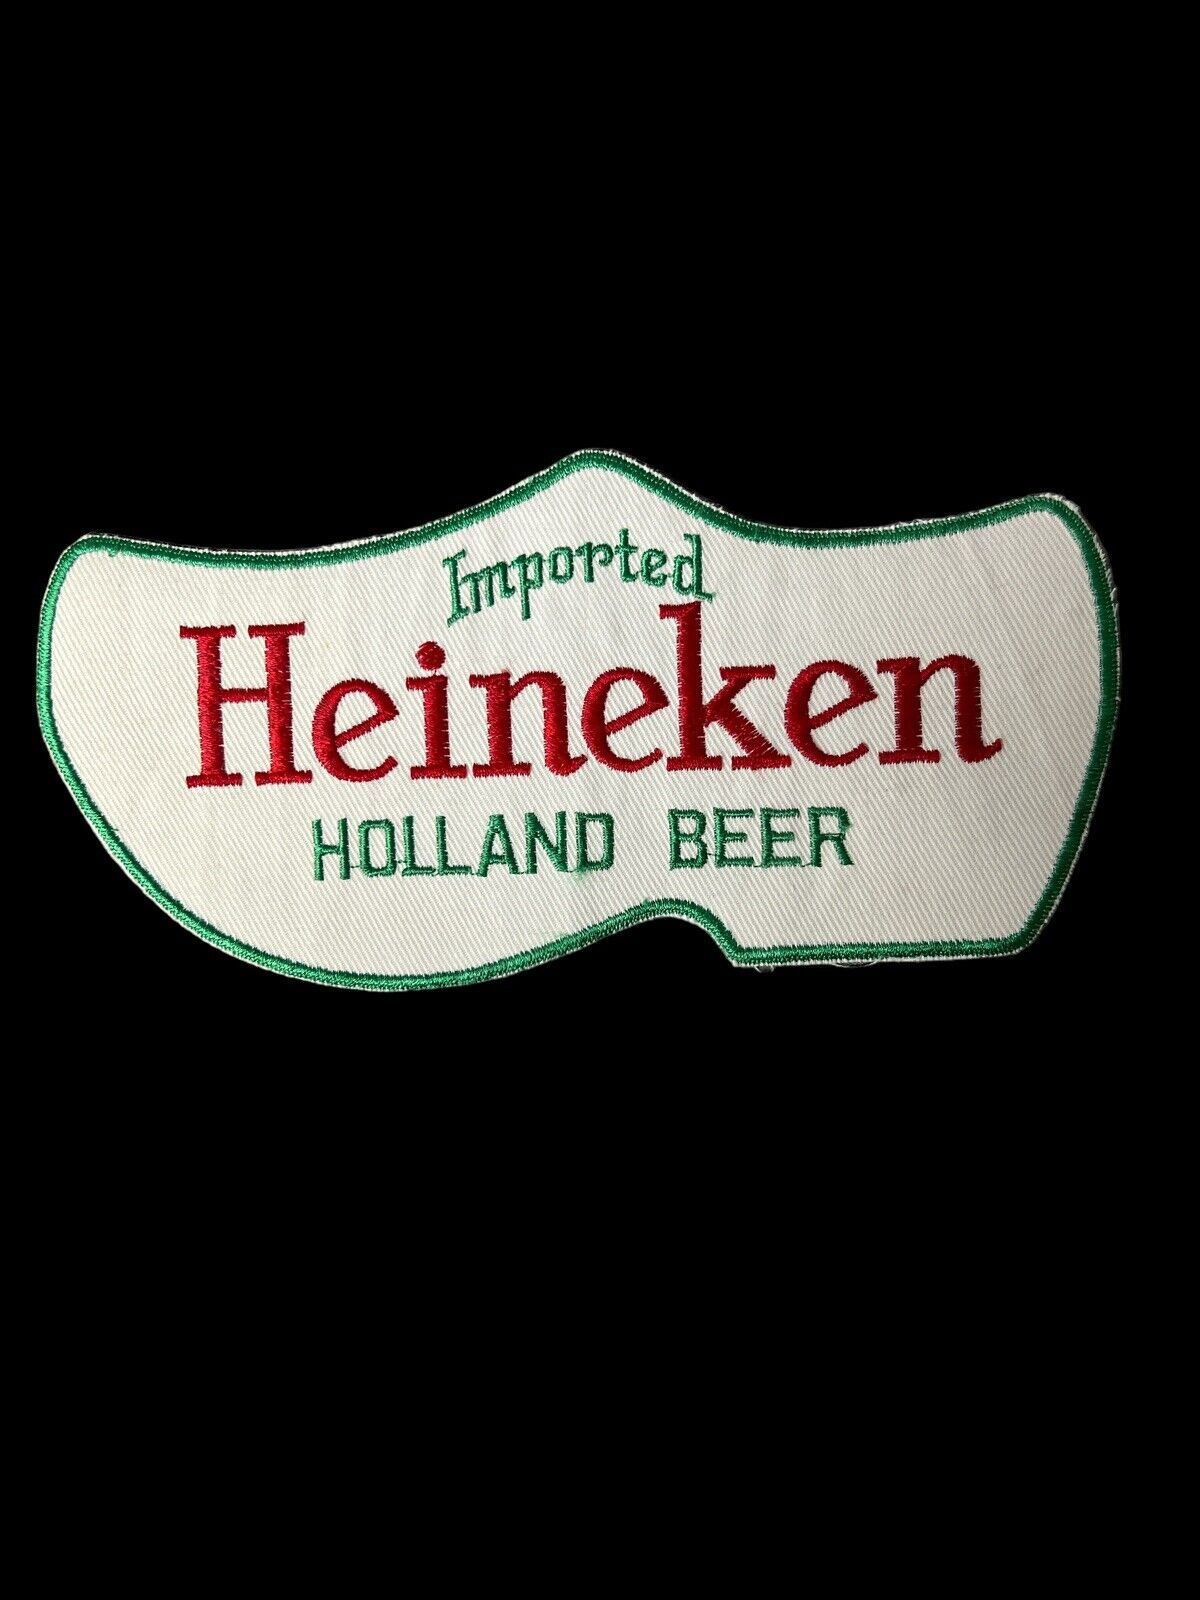 8.75” Heineken Shoe Large Block Print Beer Embroidered Patch -S6